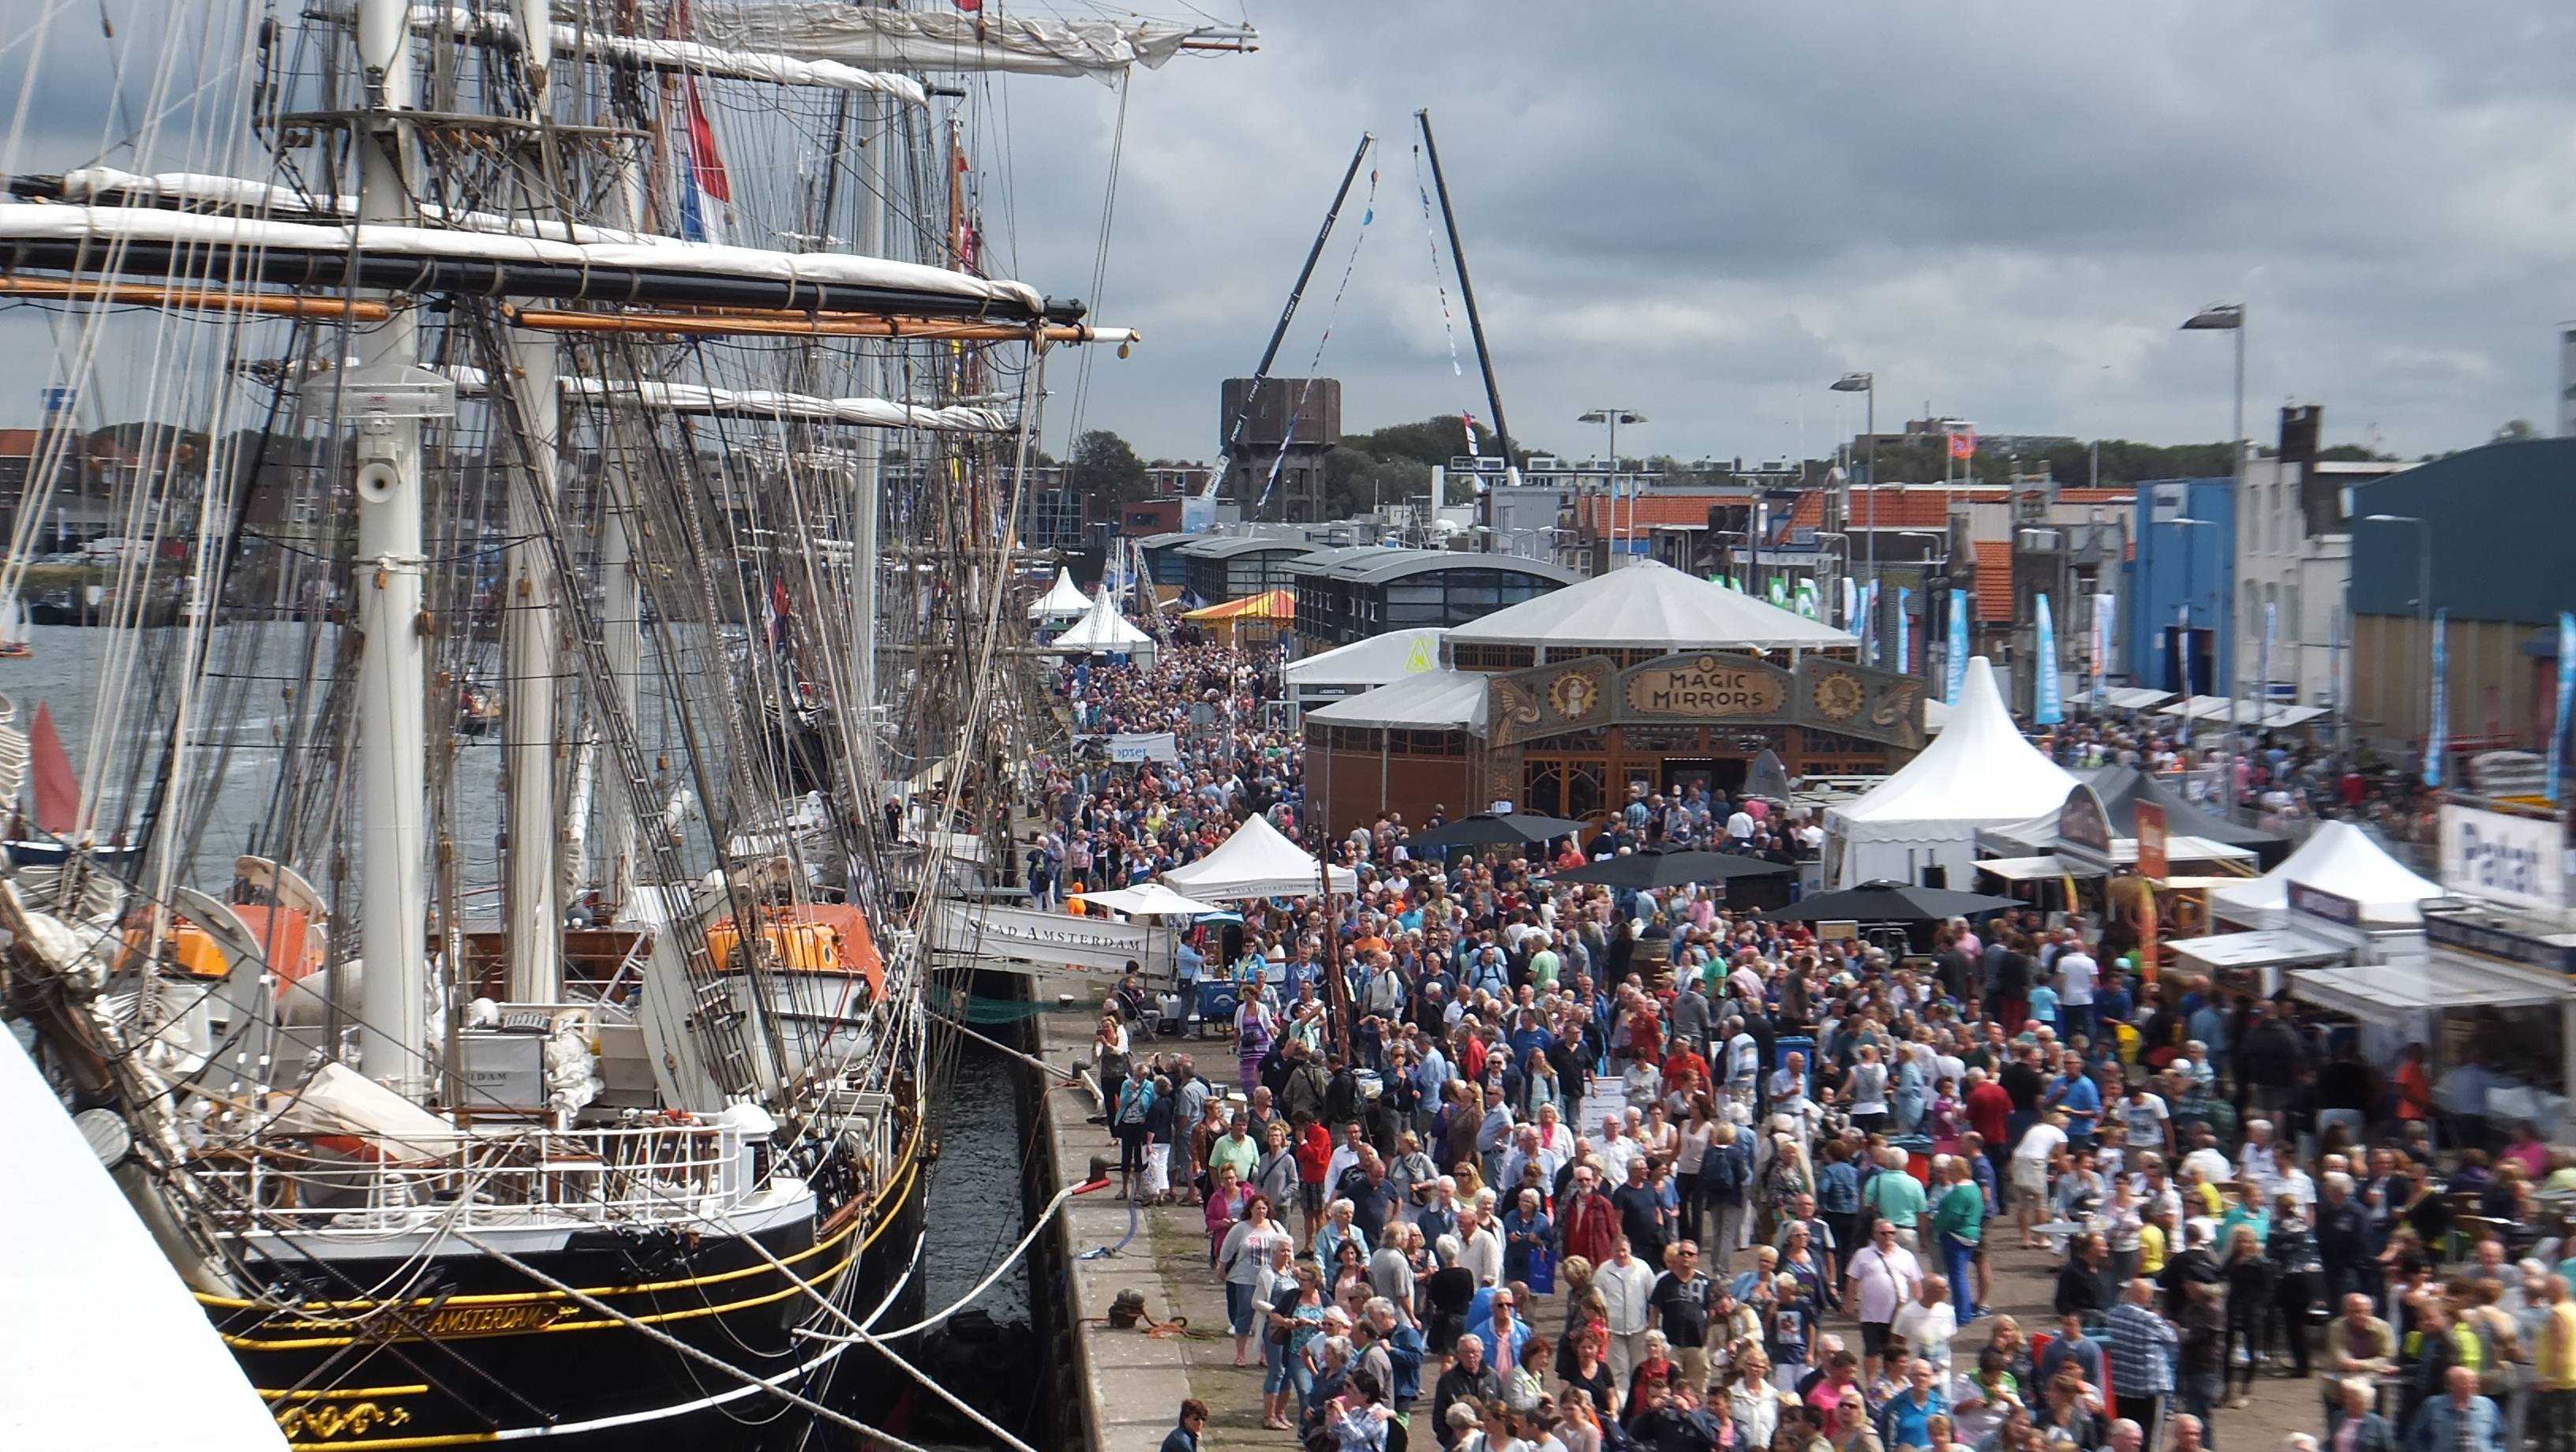 Havenfestival IJmuiden 2015 